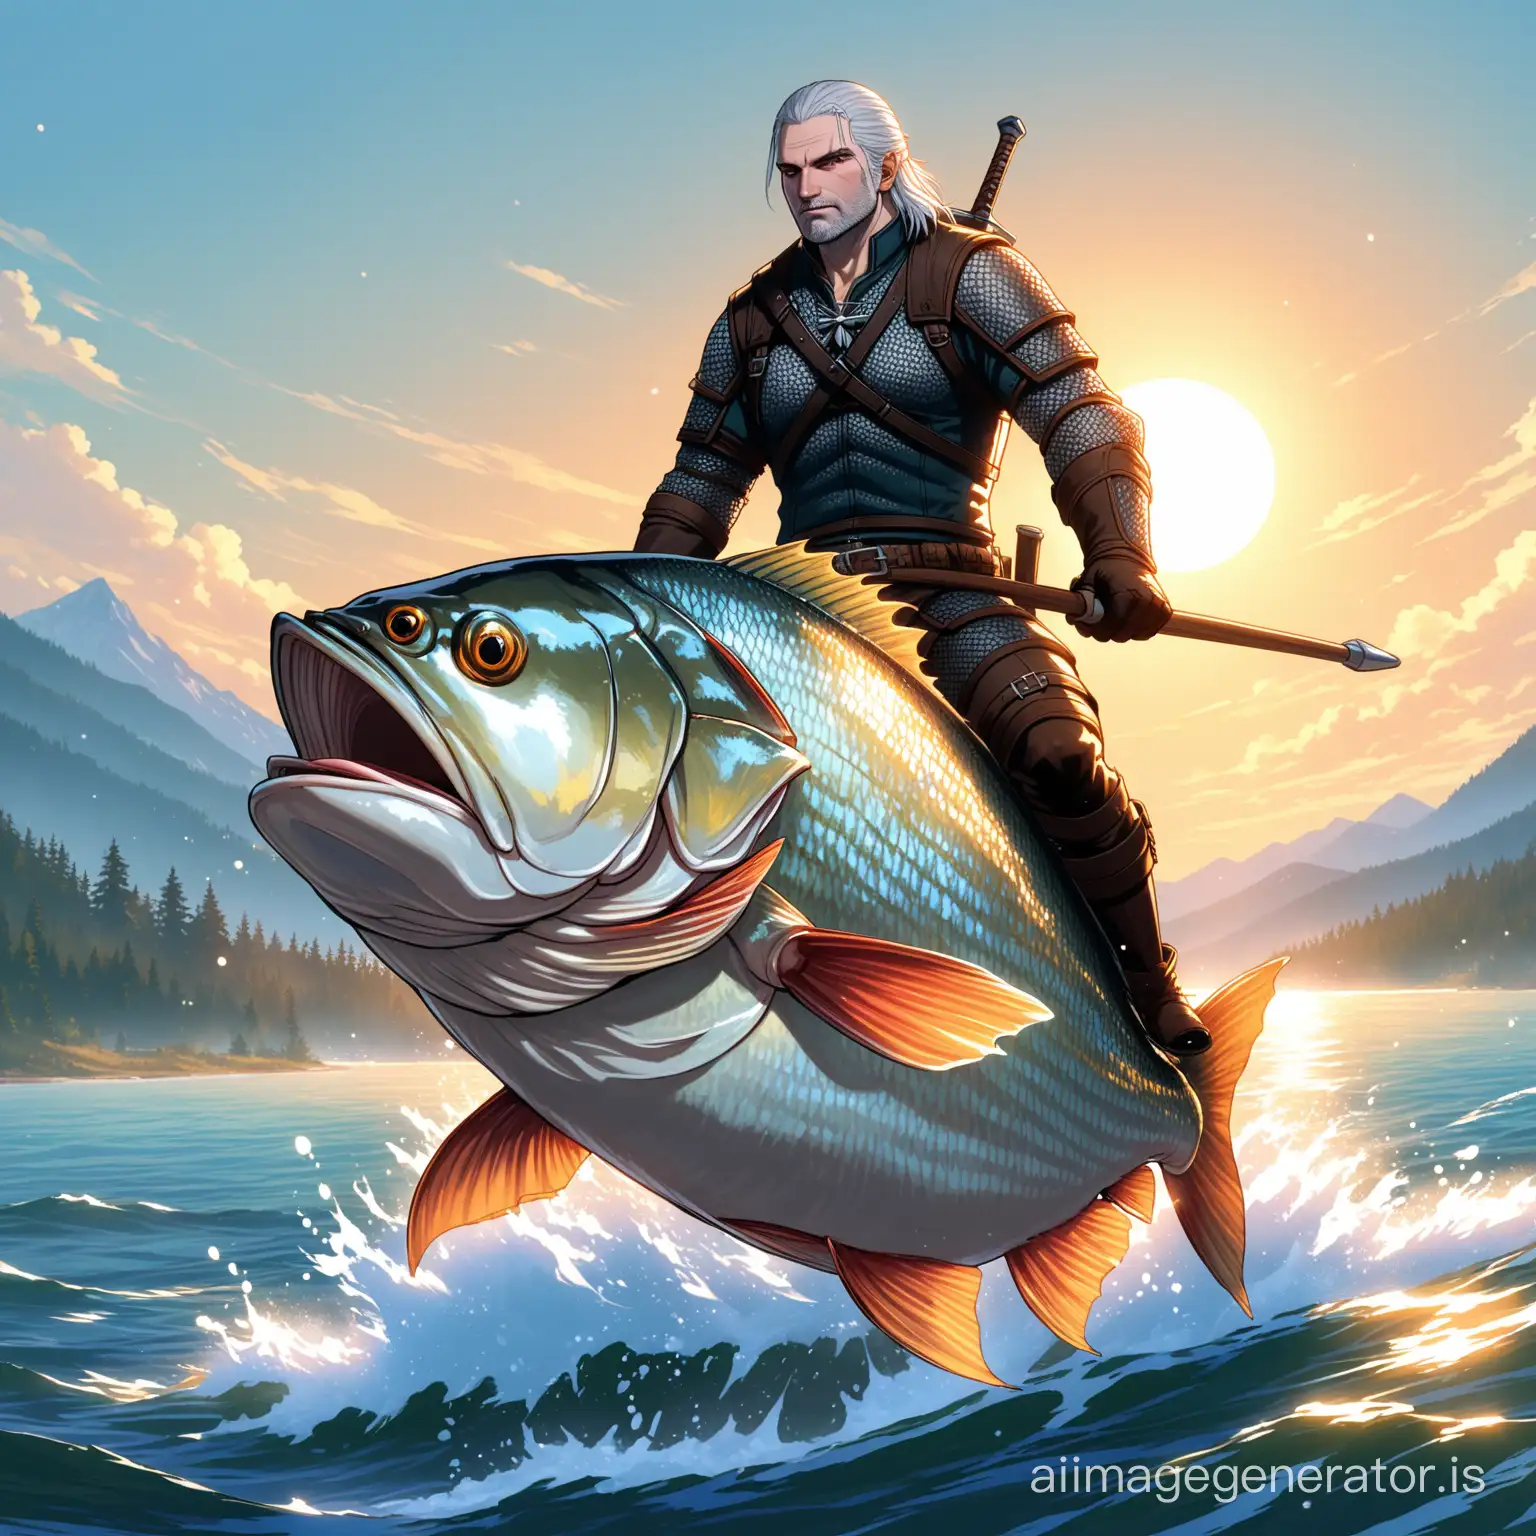 Geralt is riding a bream.